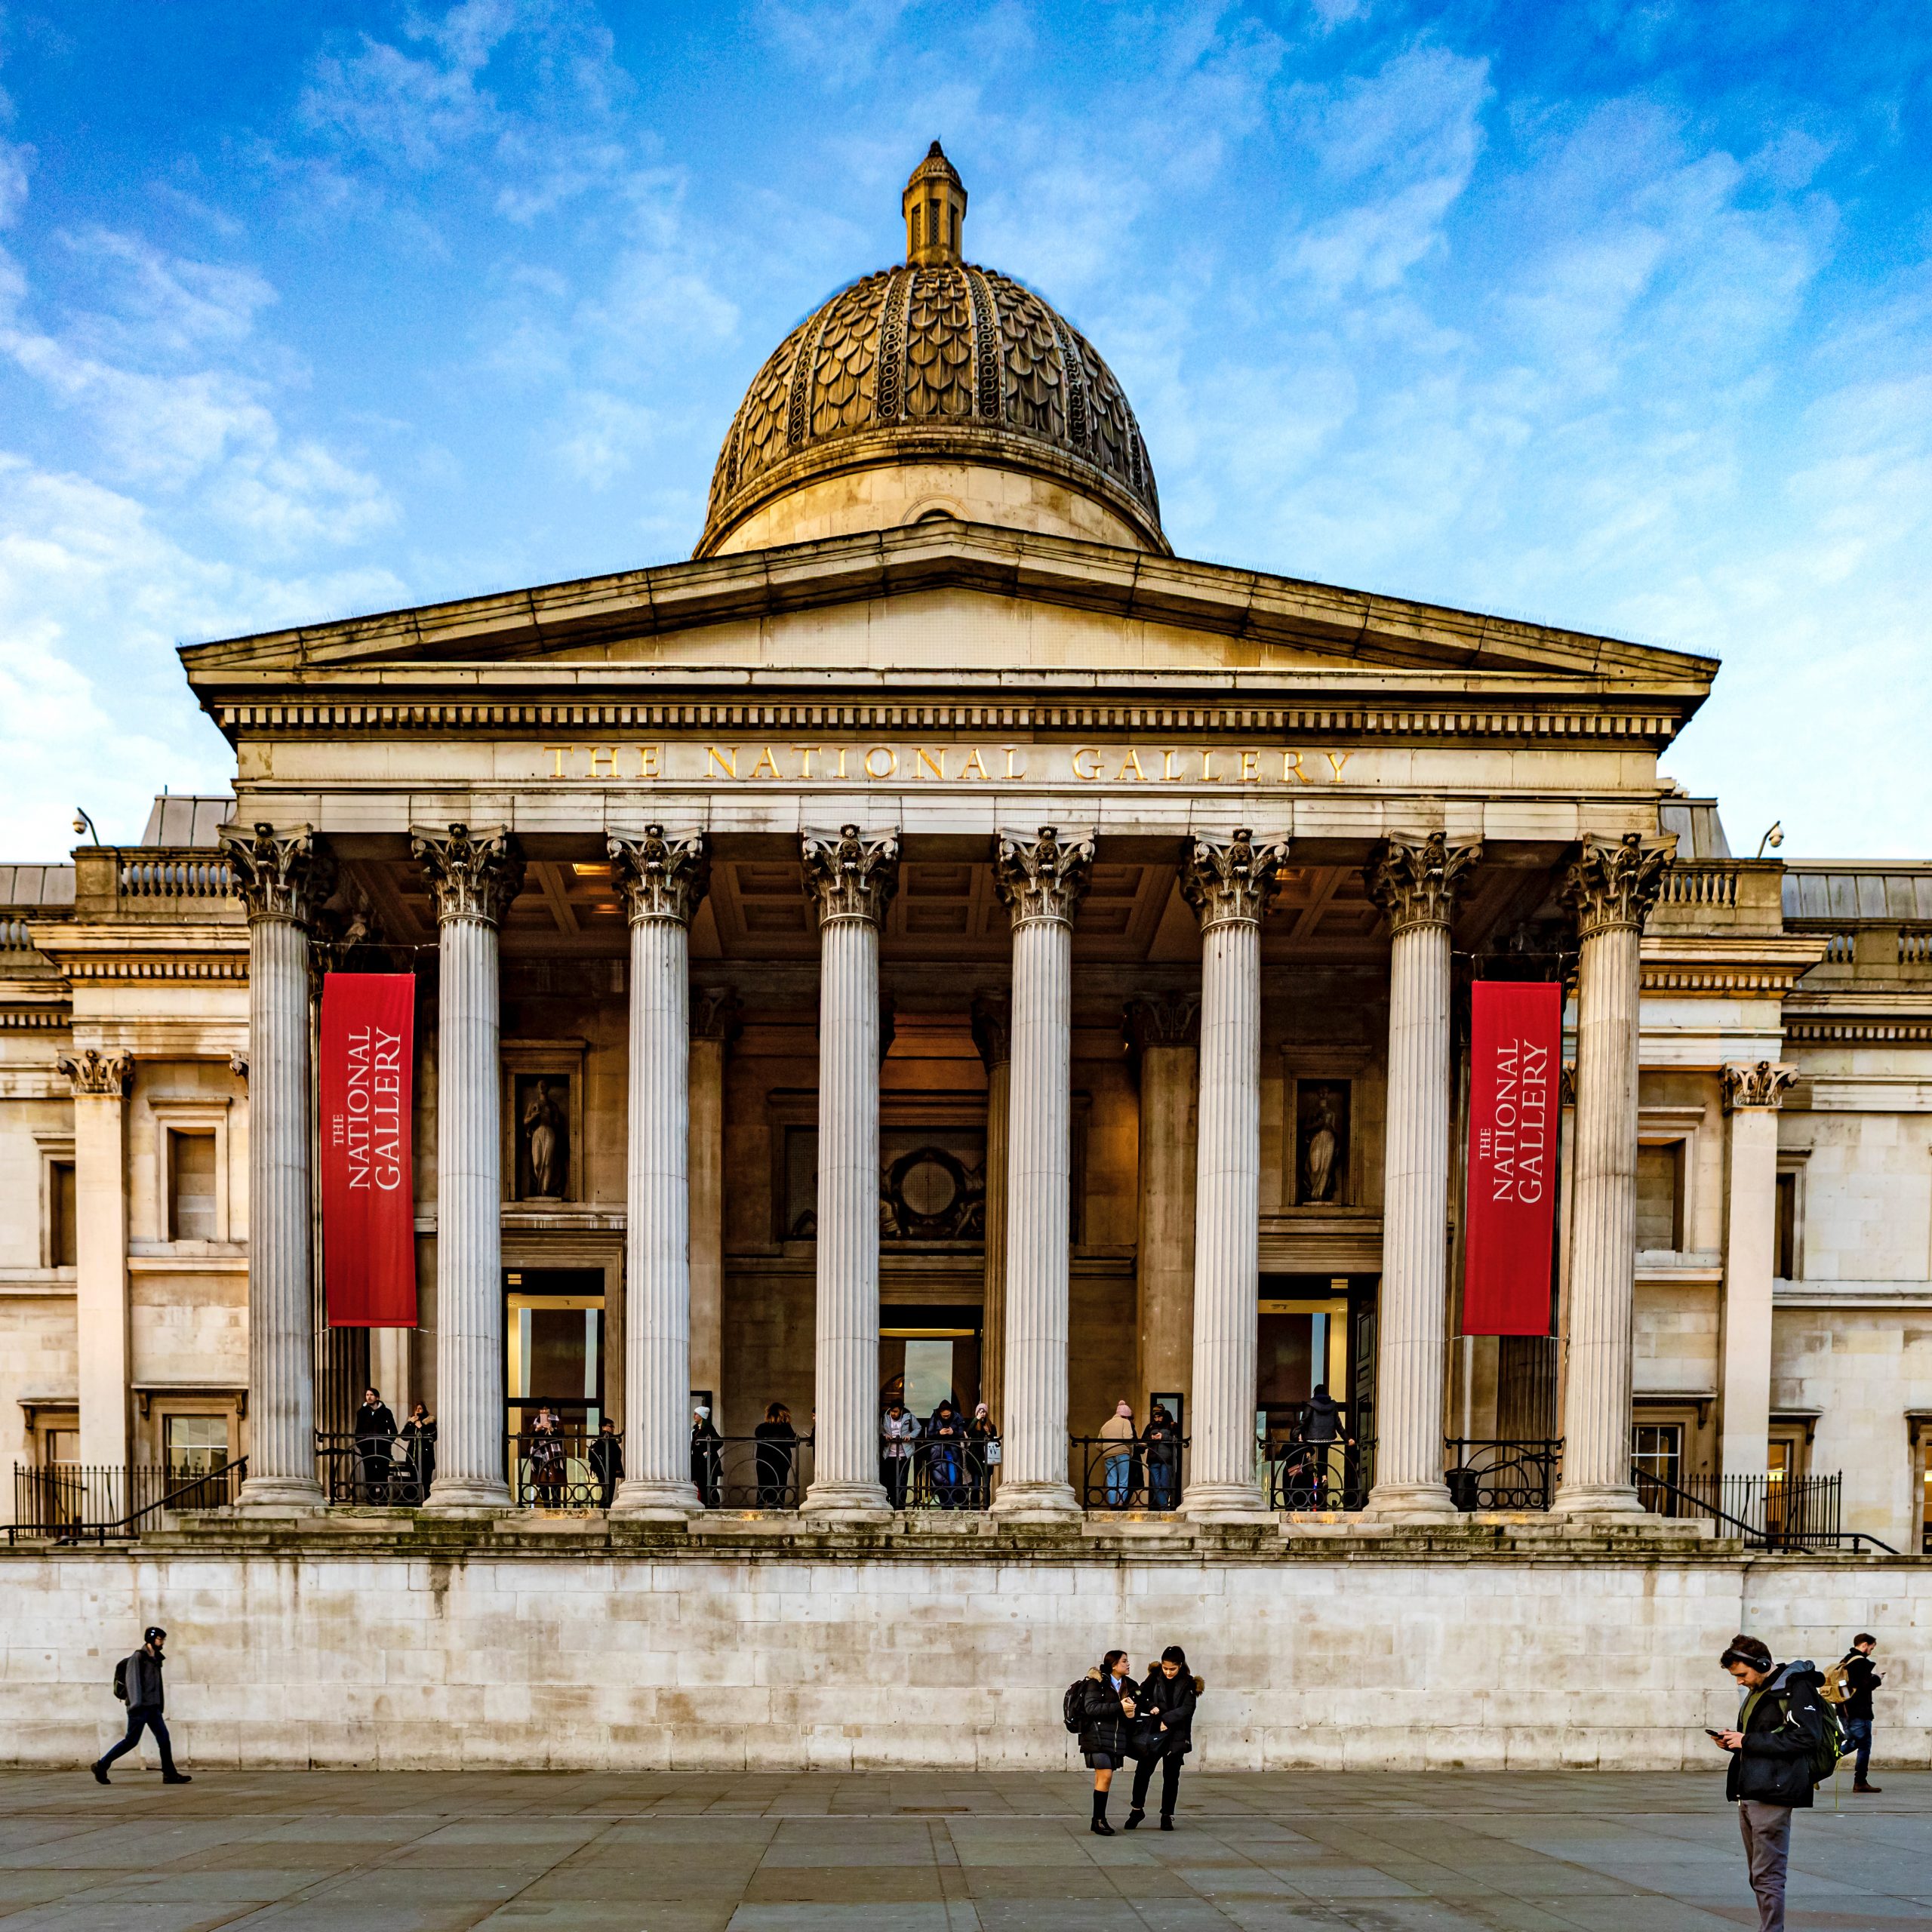 National art gallery london